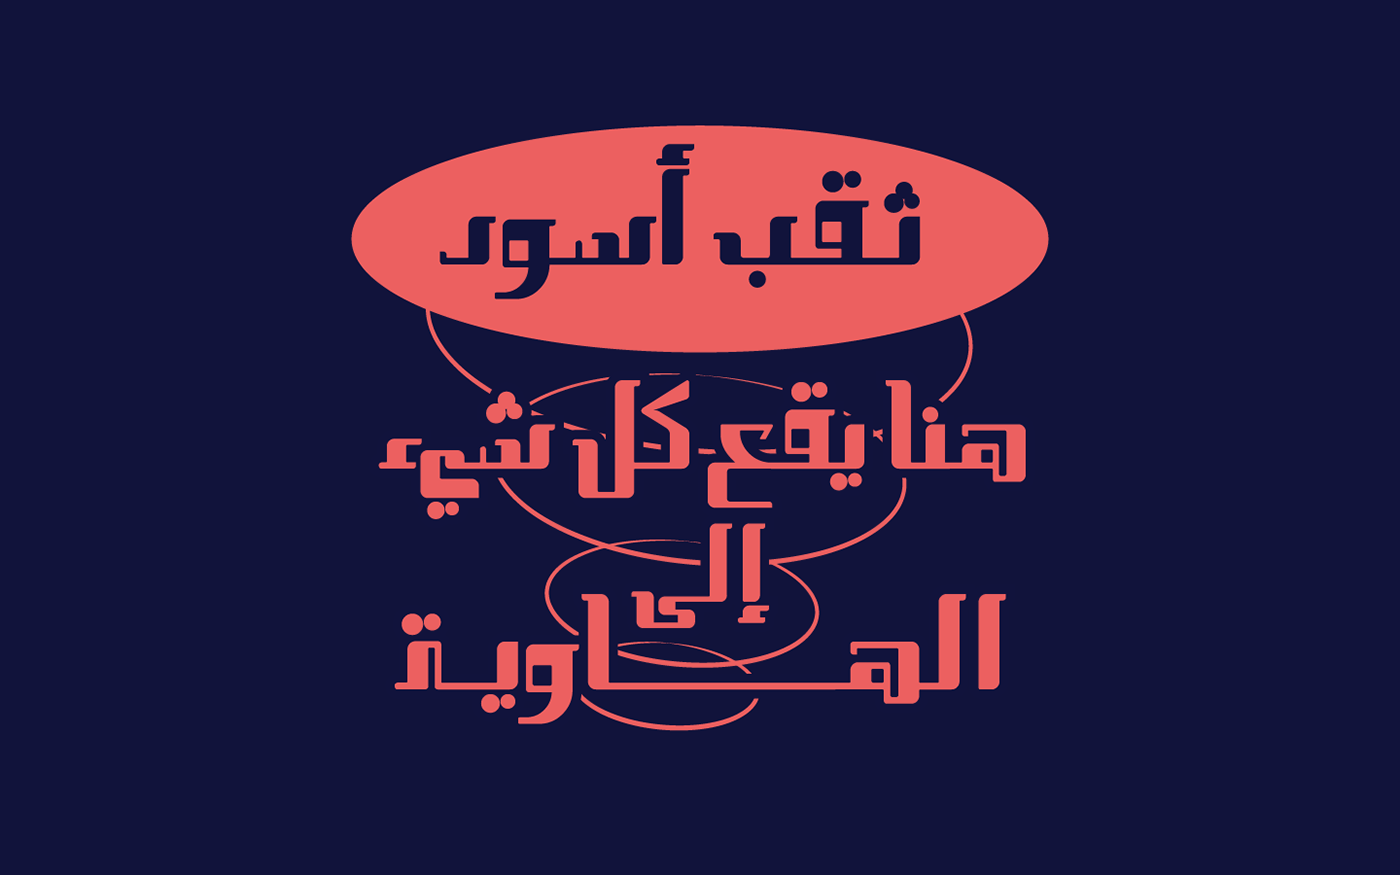 MAJARRAT Free Font - arabic